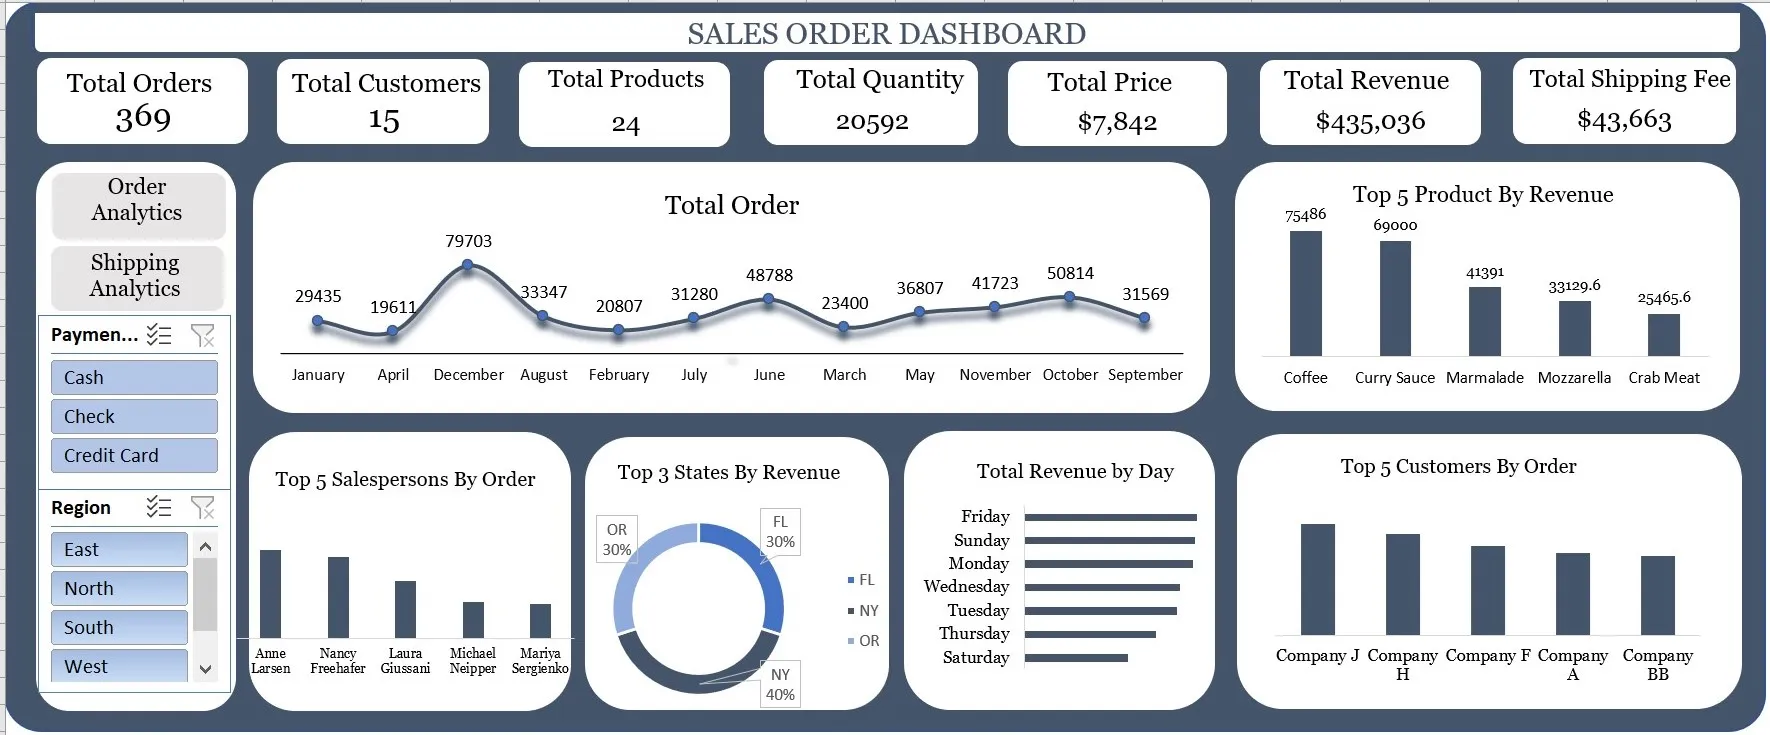 sales order dashboard